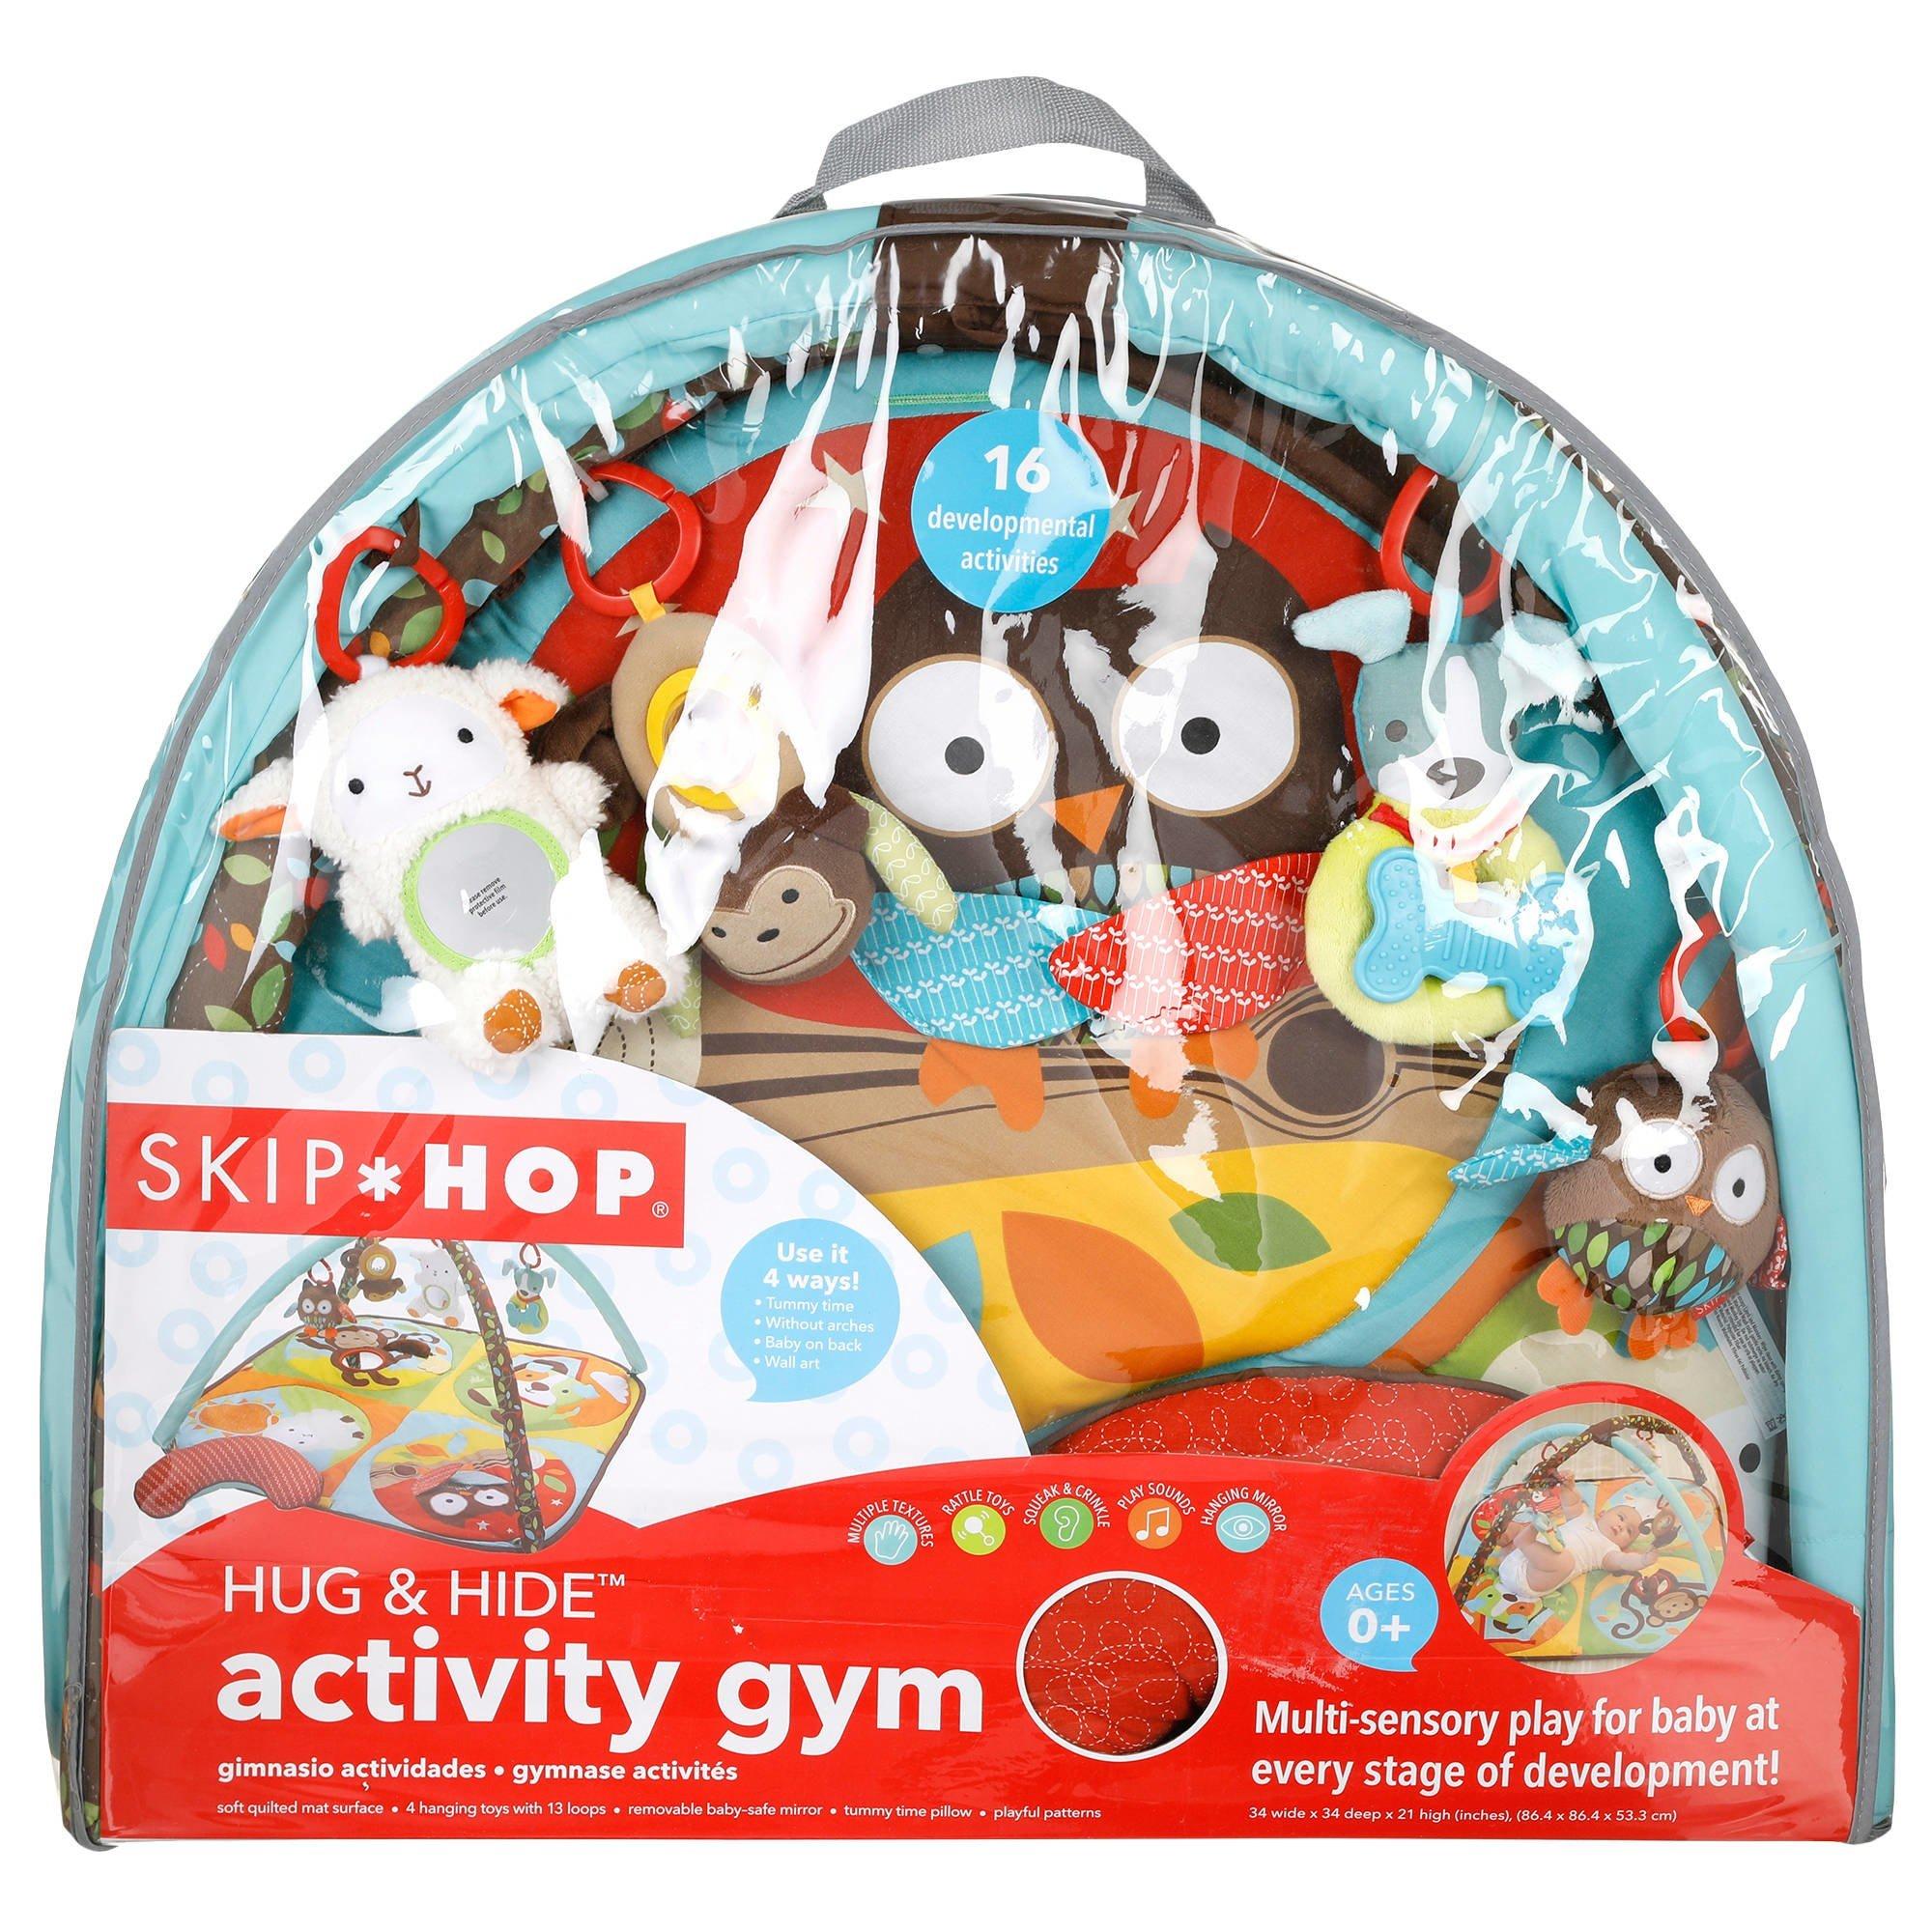 skip hop hug & hide activity gym